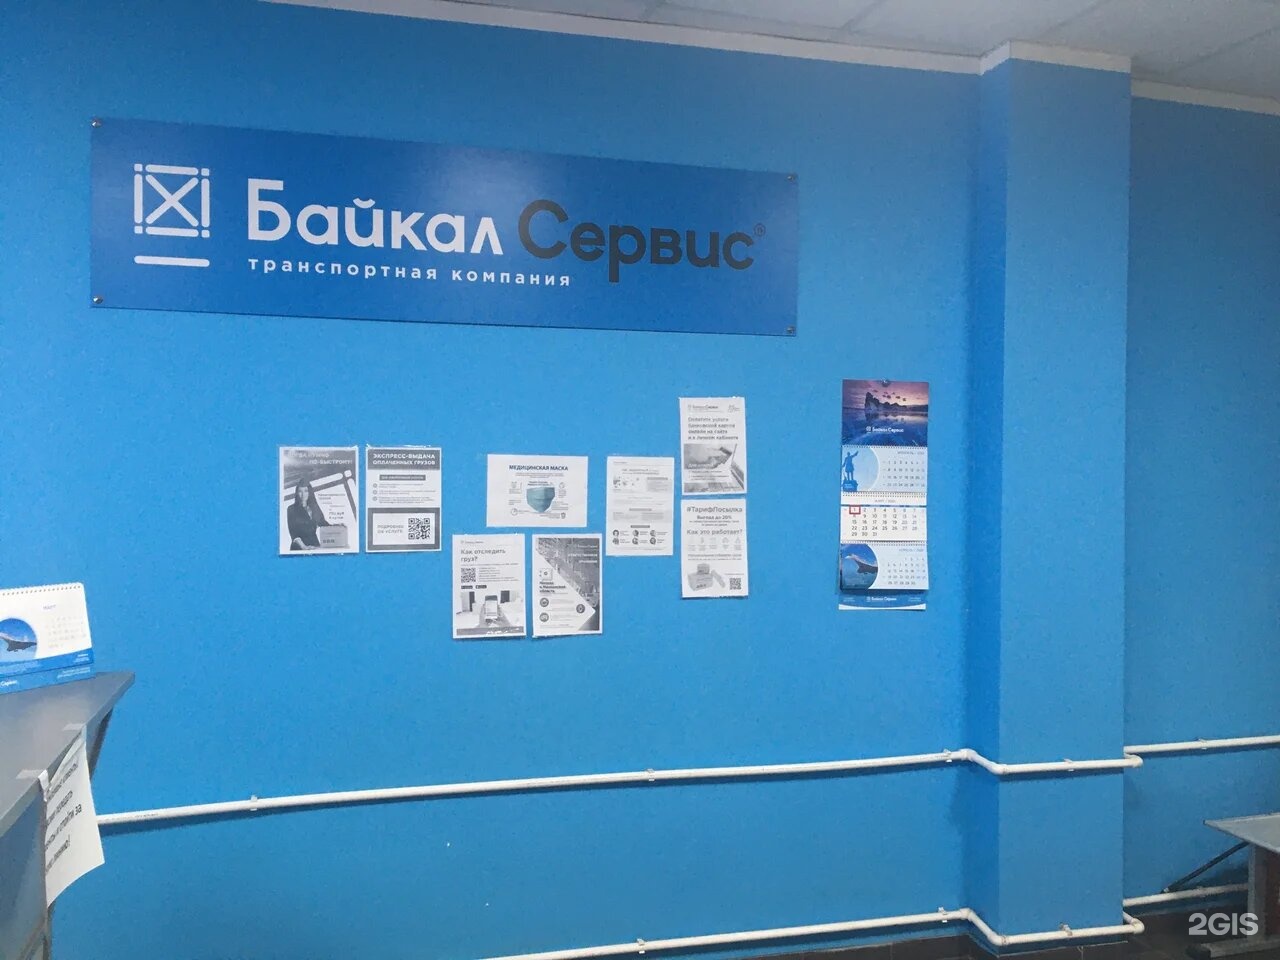 Байкал сервис лого